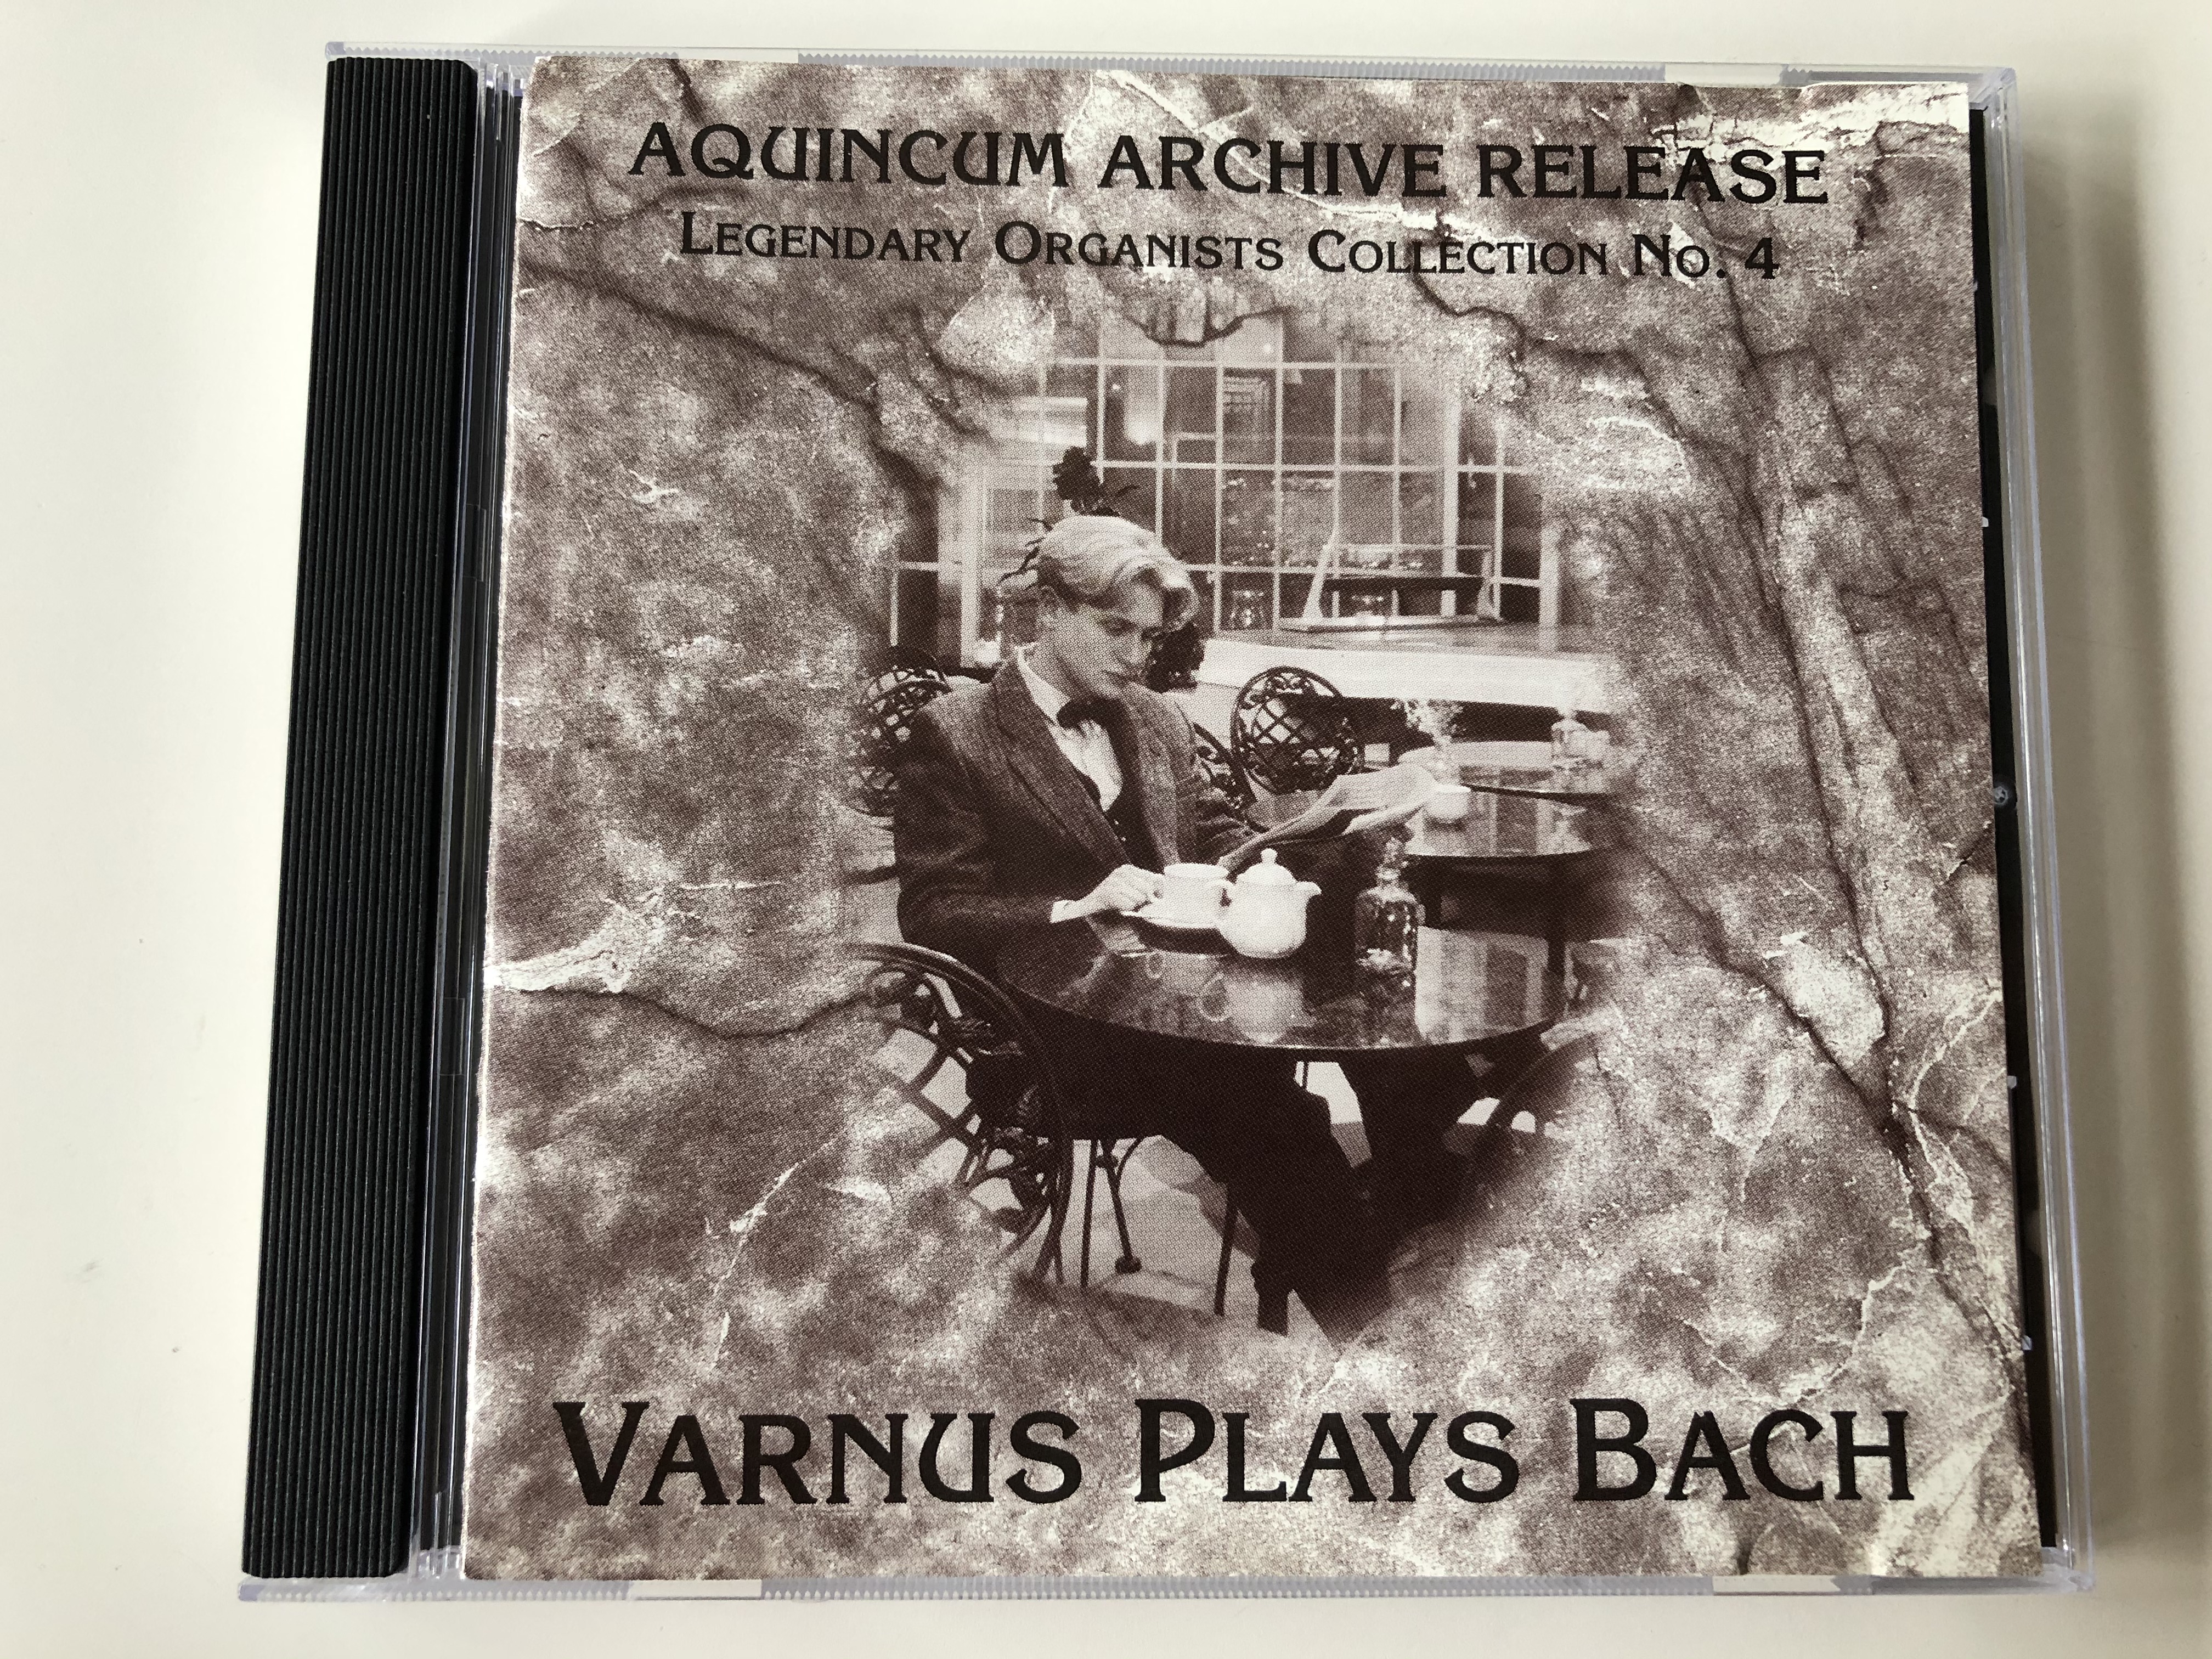 aquincum-archive-release-legendary-organists-collection-no.-4-varnus-plays-bach-aquincum-archive-release-audio-cd-1995-acd-1438-1-.jpg